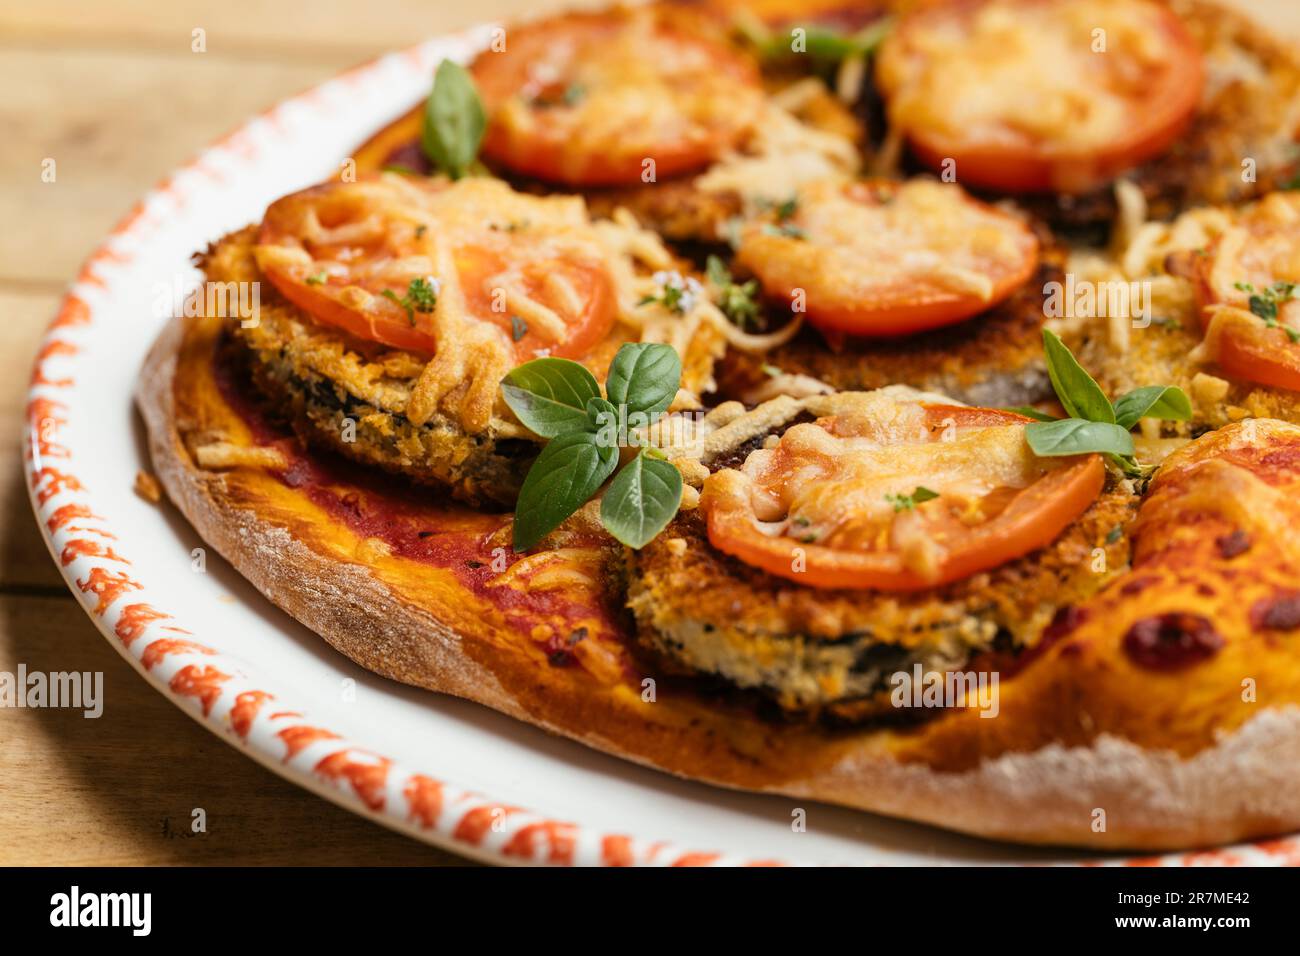 Home made vegan breaded eggplant pizza. Stock Photo